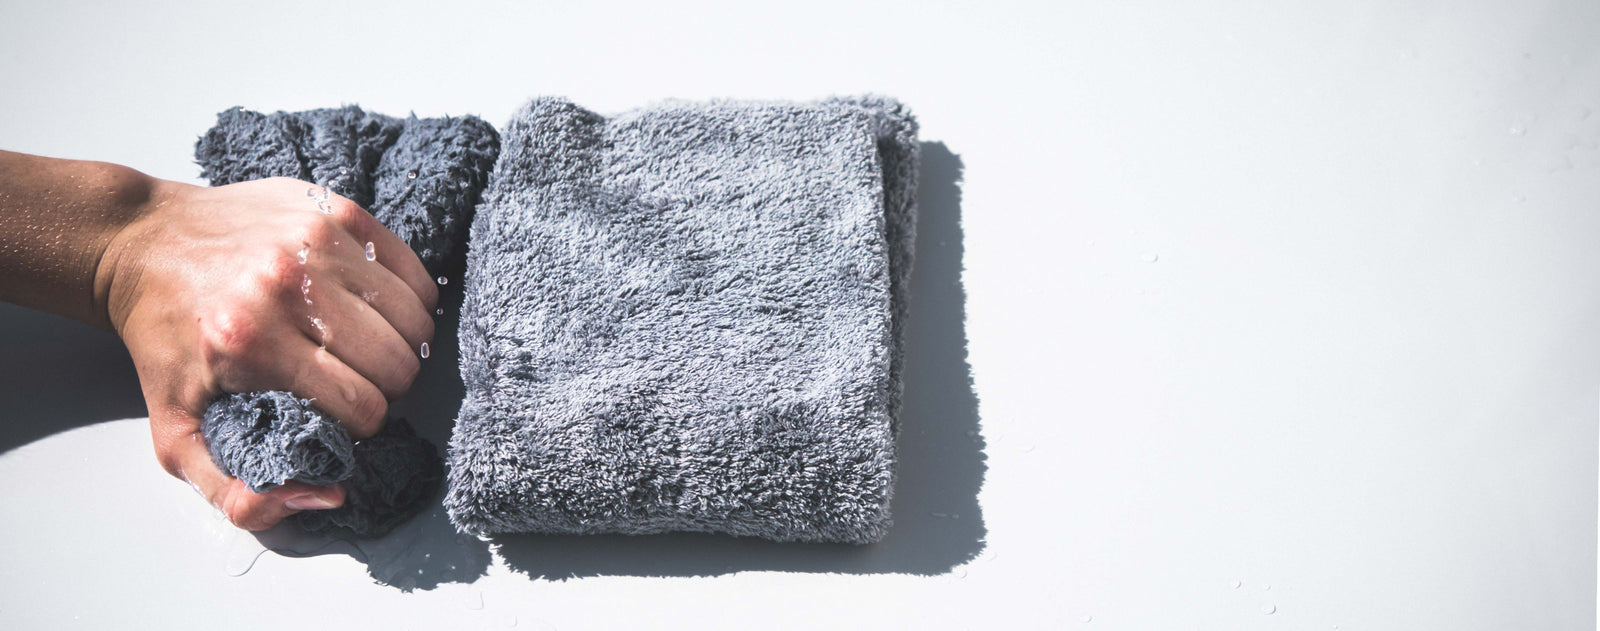 Adam's Double Soft Microfiber Towel